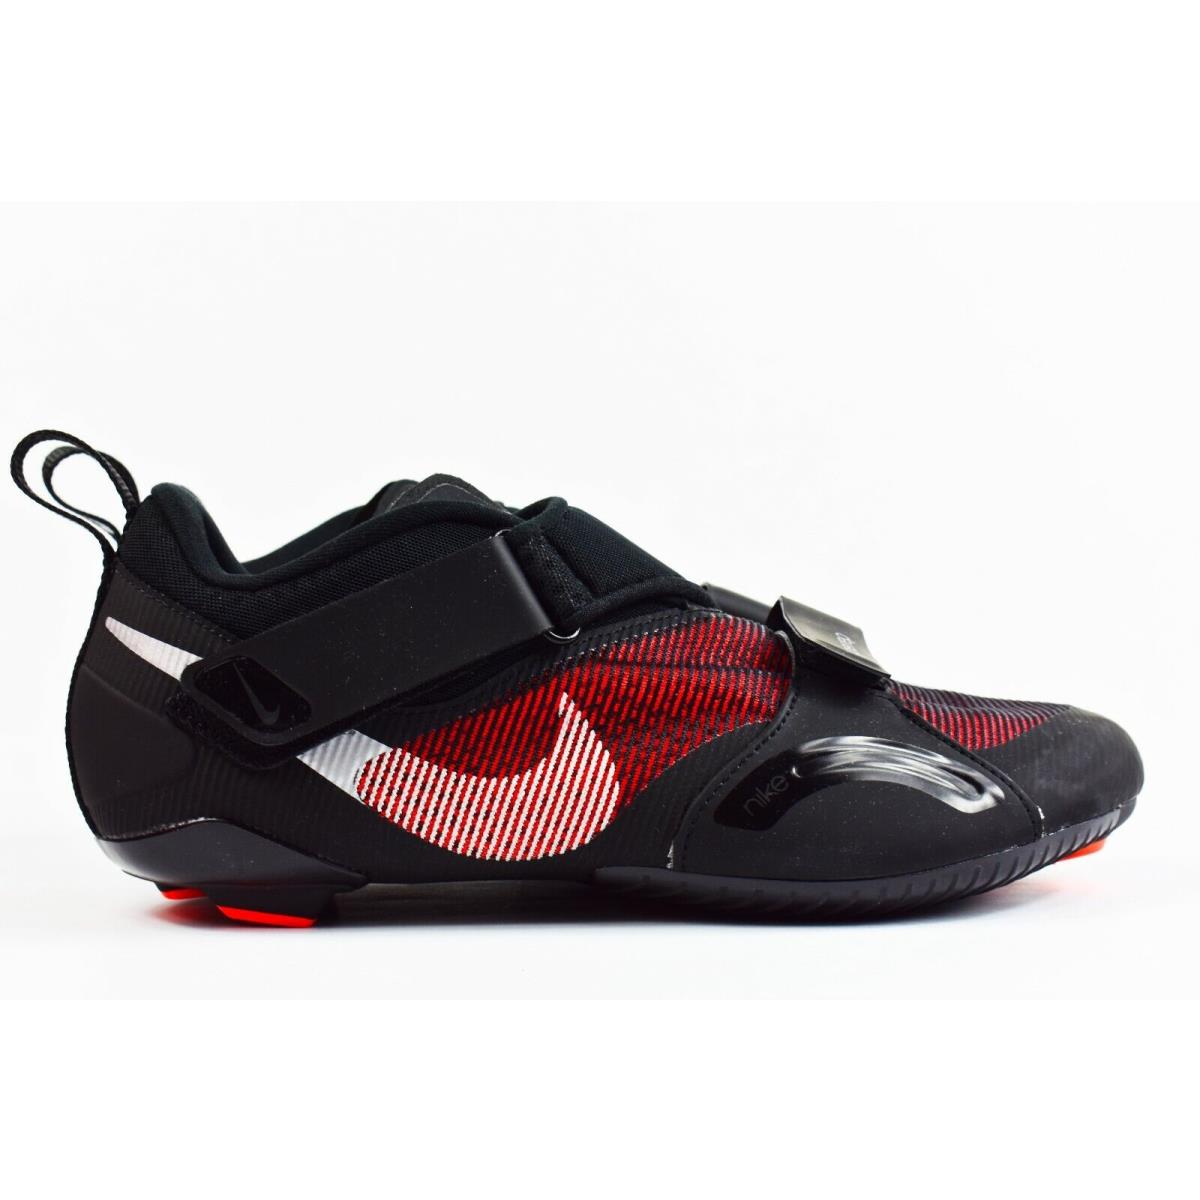 Nike Superrep Cycle Womens Size 6 Cycling Shoes CJ0775 008 Black